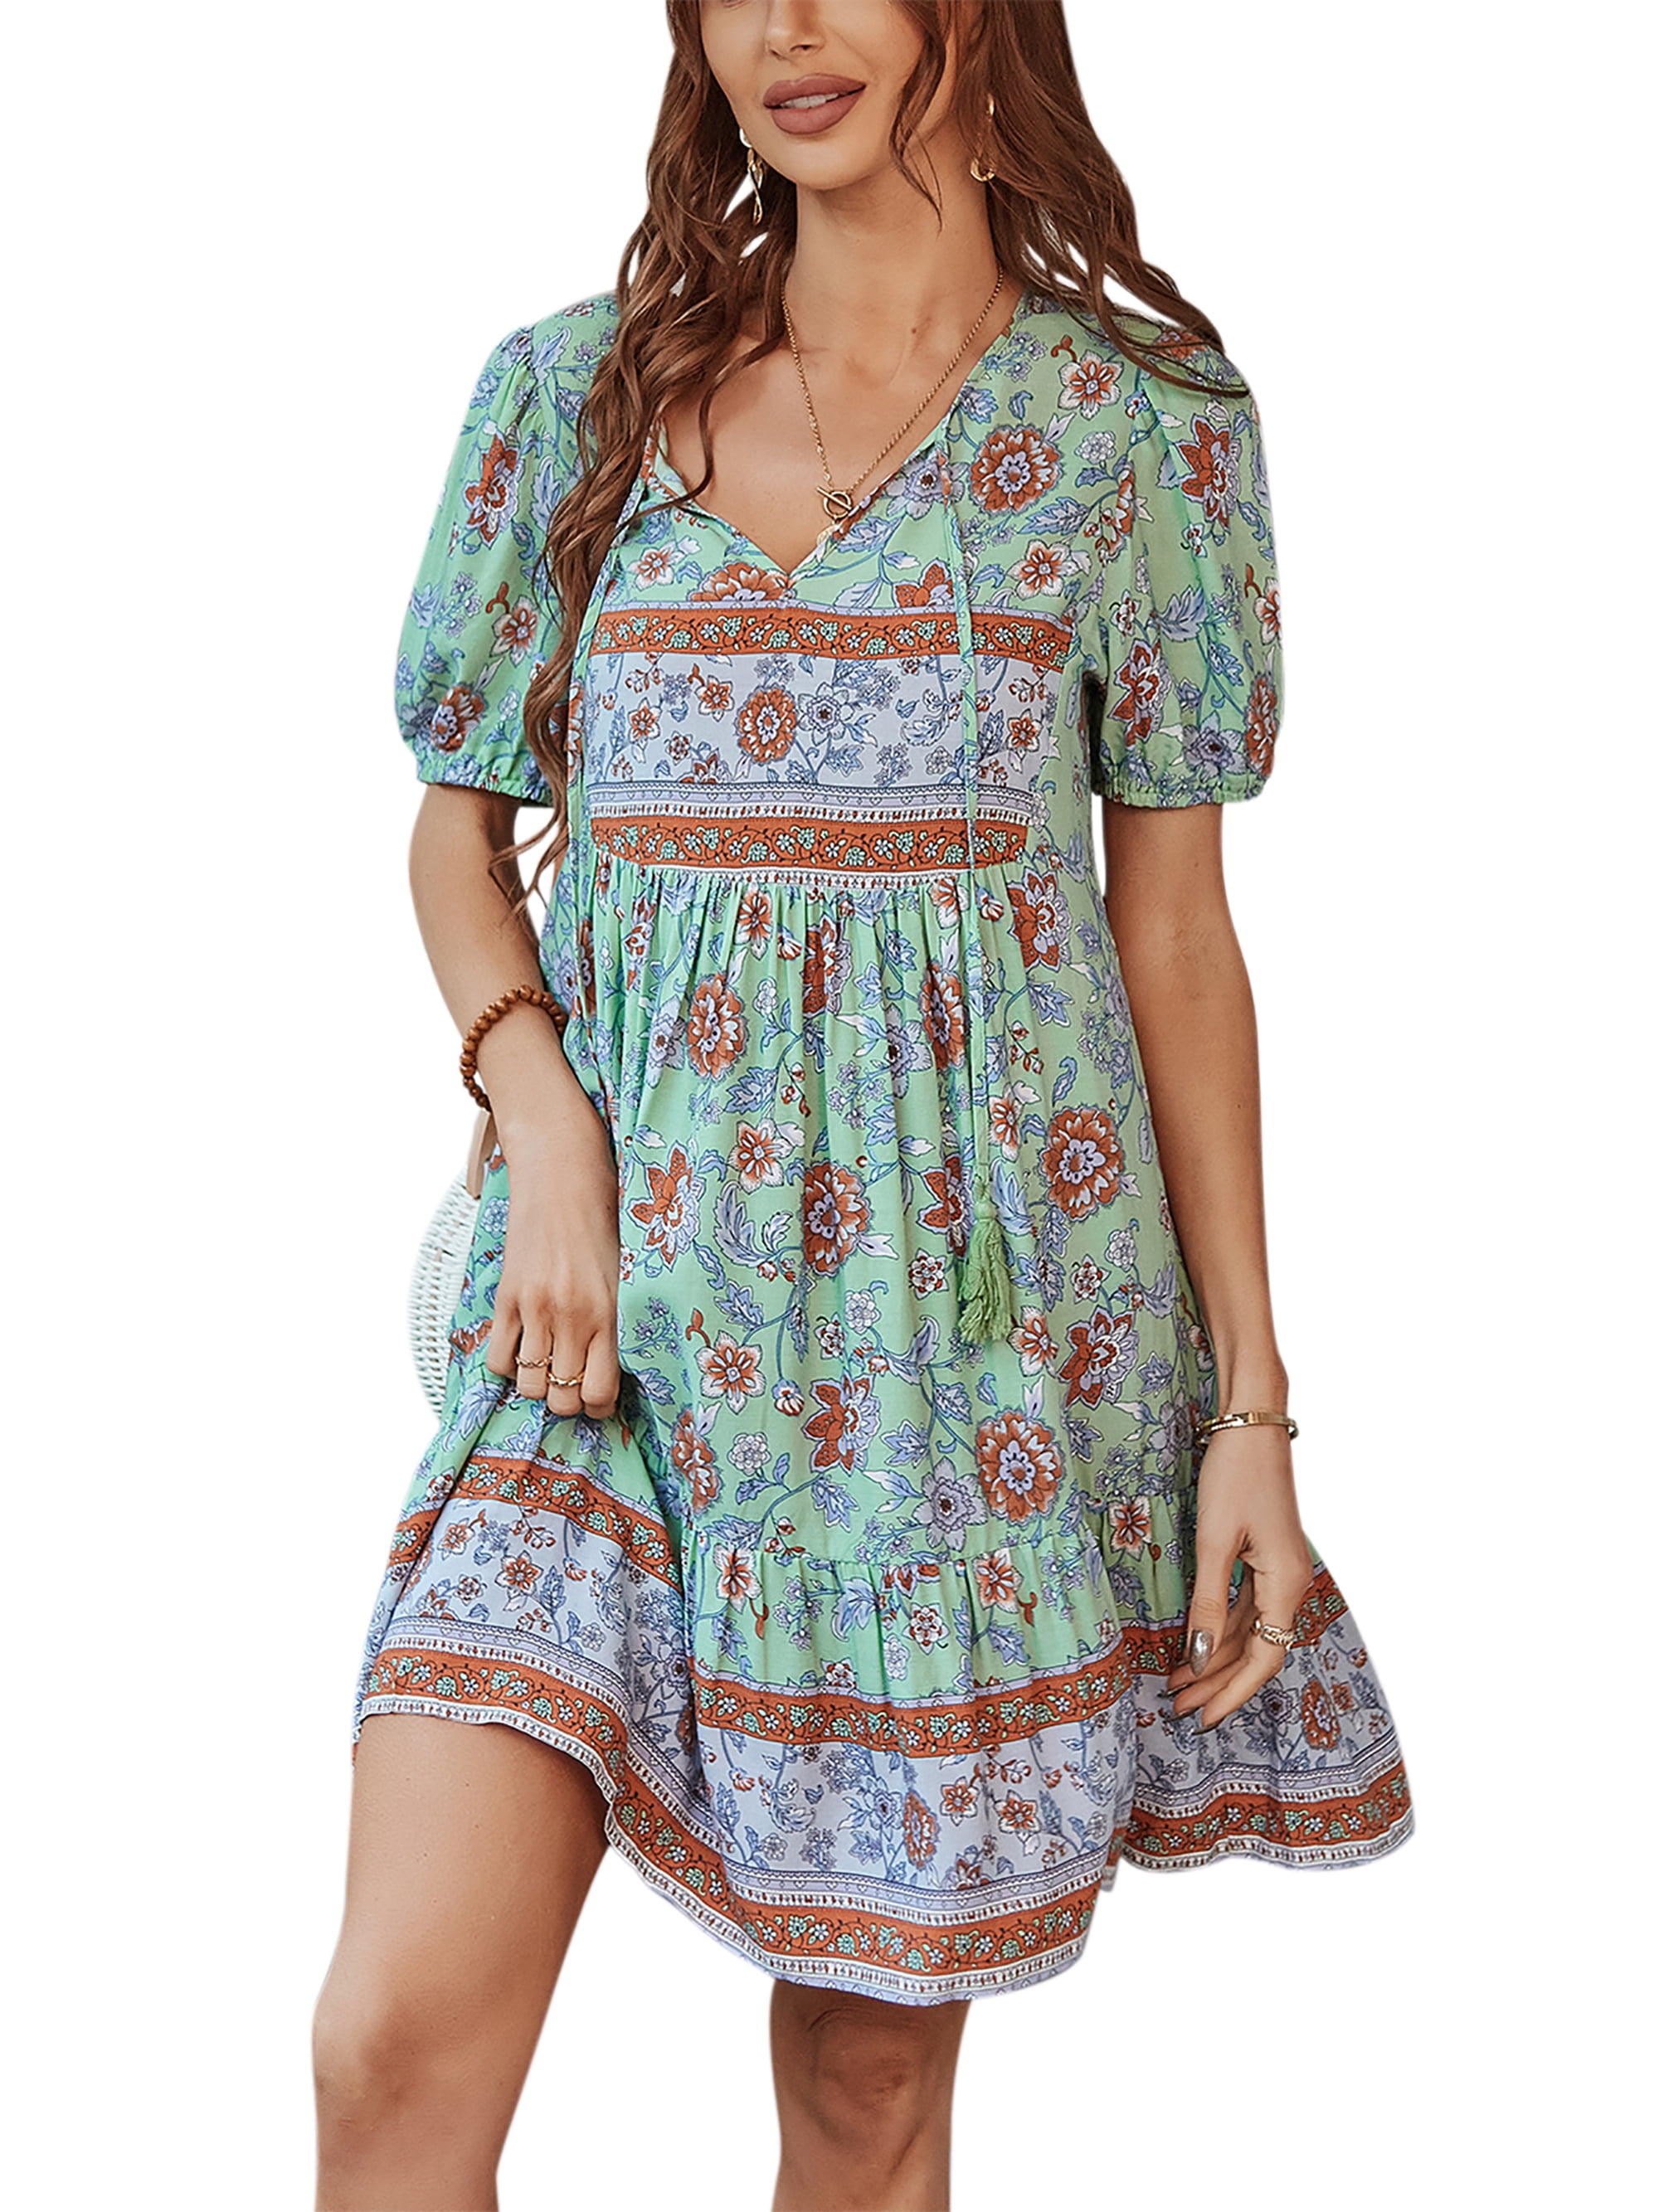 TEMOFON Bohemian Dress for Women Summer Floral Print Dress Casual V ...